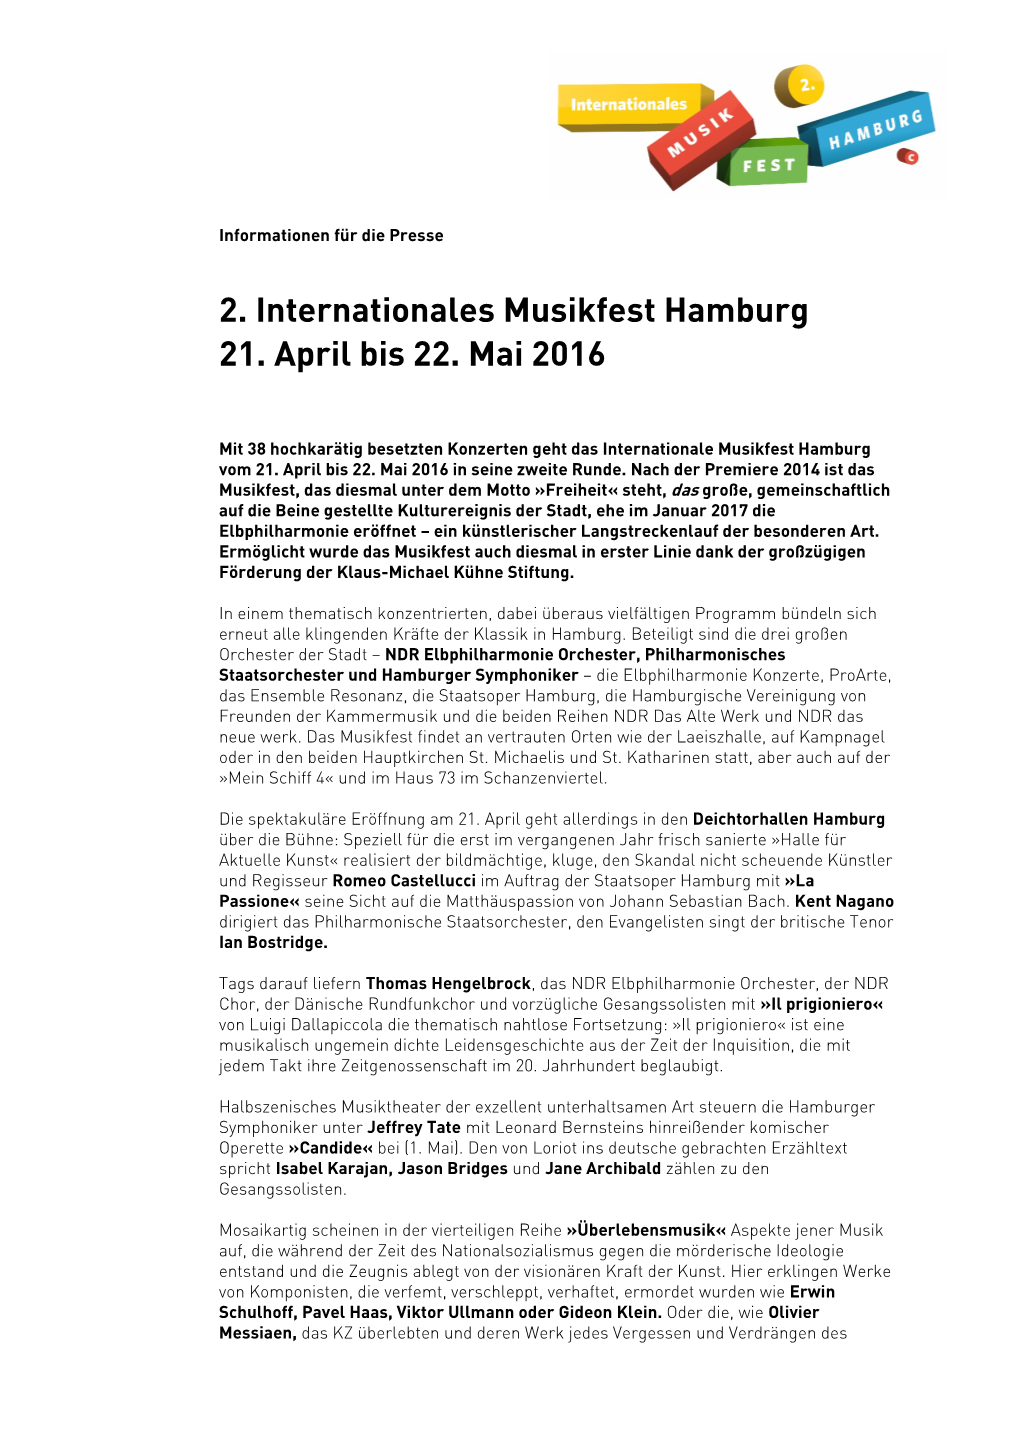 2. Internationales Musikfest Hamburg 21. April Bis 22. Mai 2016